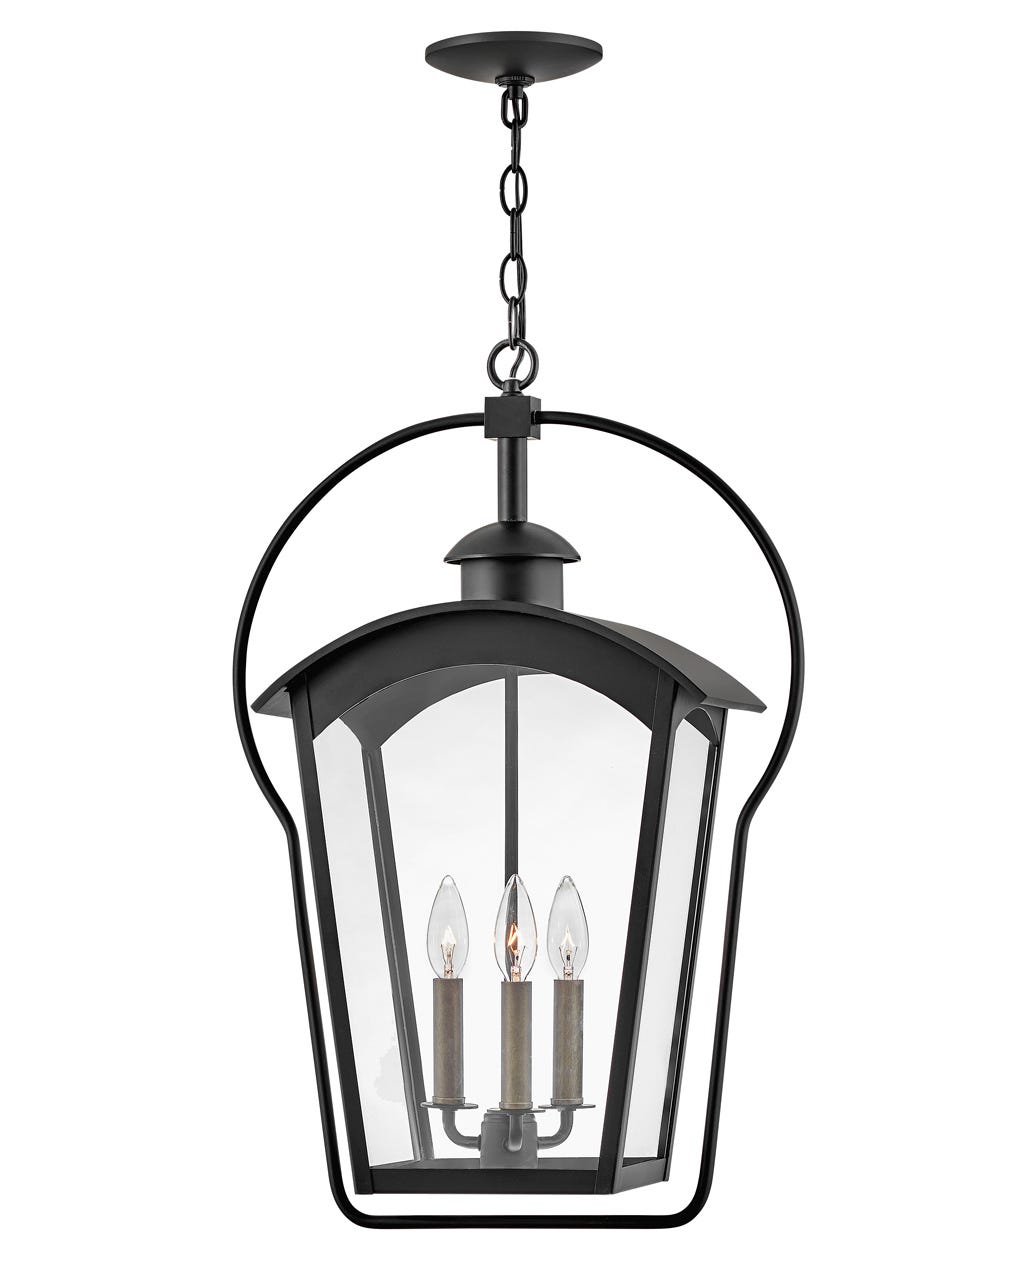 OUTDOOR YALE Hanging Lantern Outdoor Light Fixture l Hanging Hinkley Black 8.5x17.0x25.75 